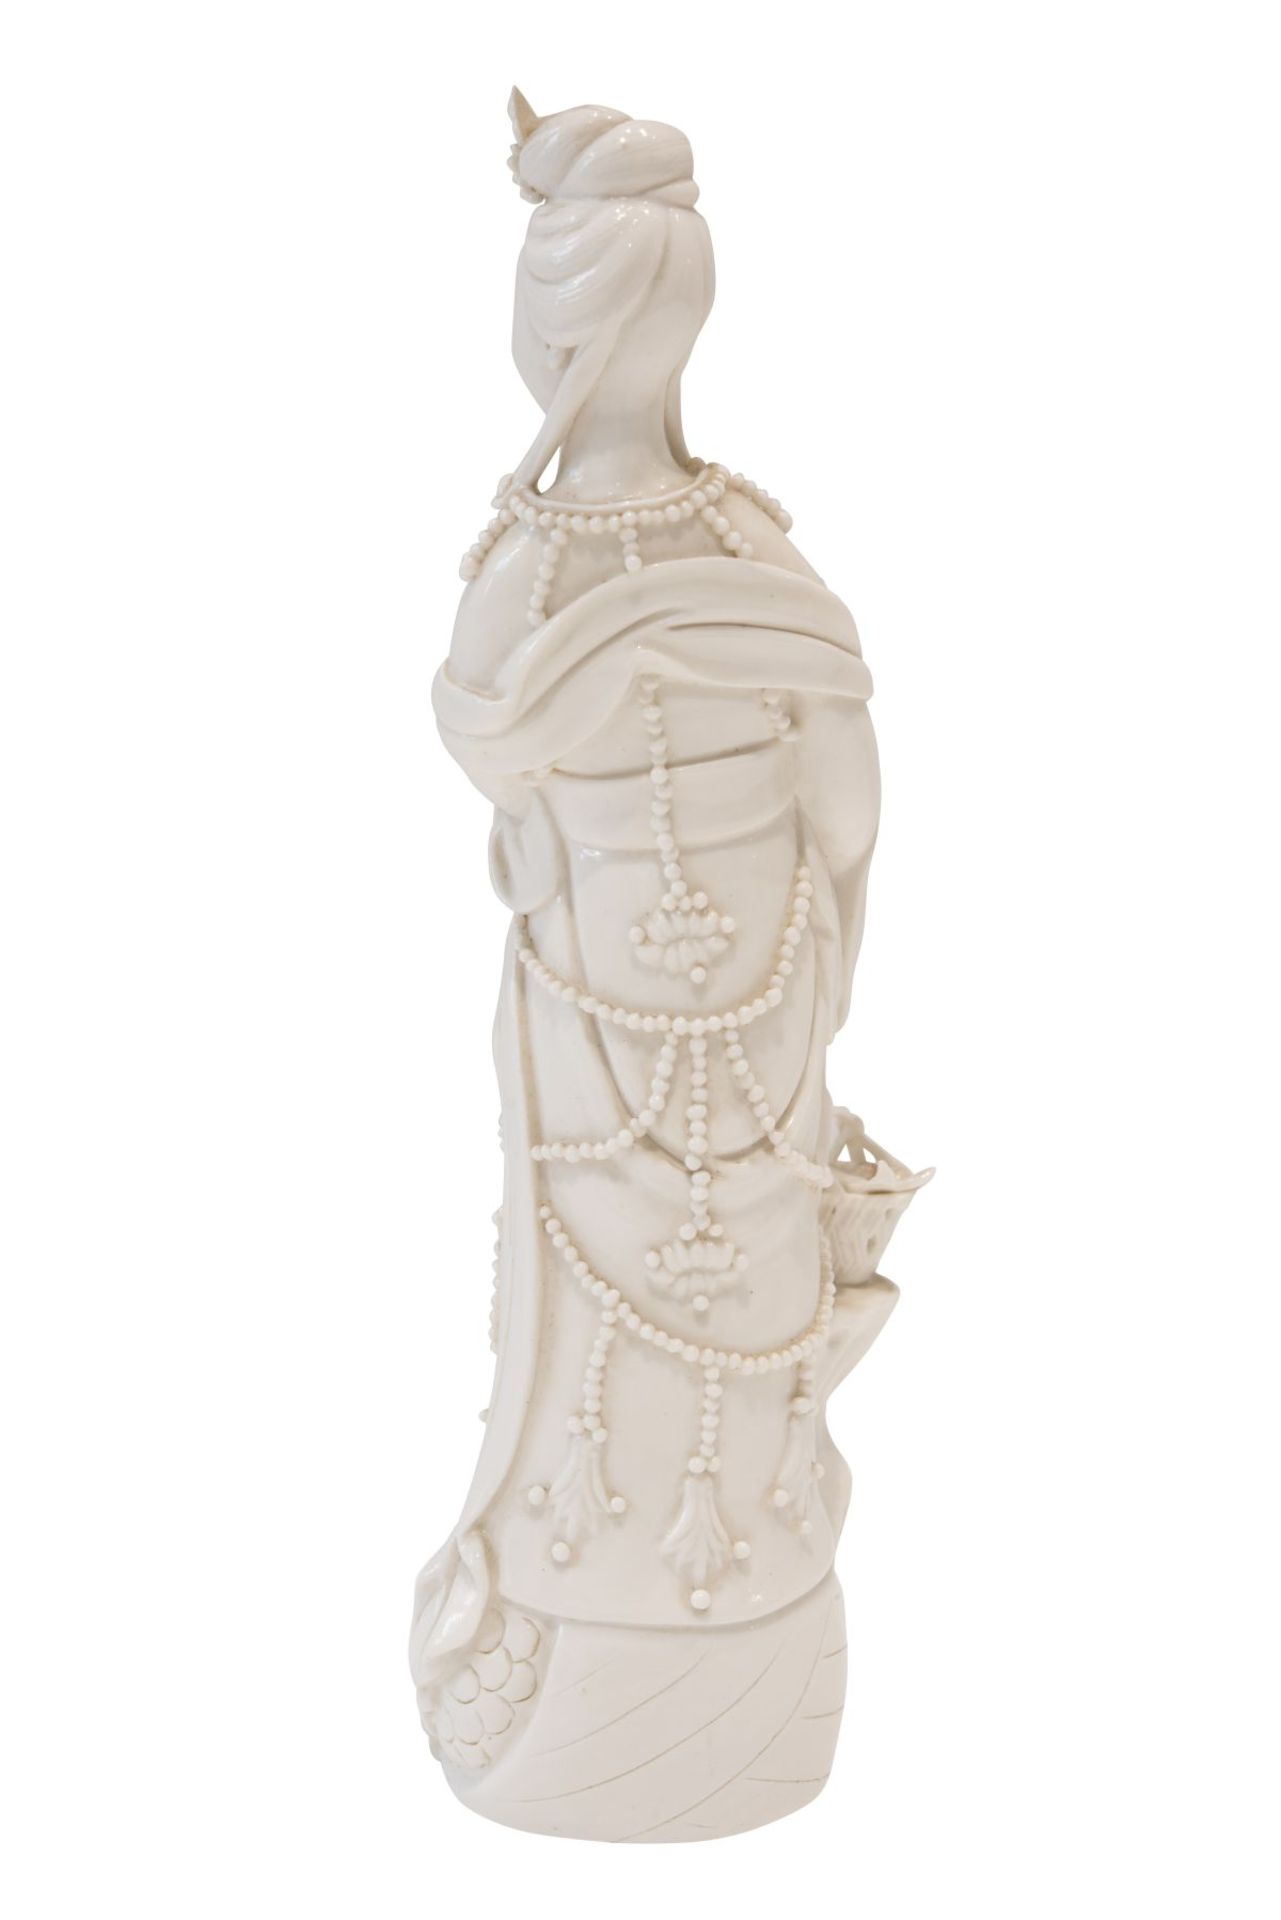 Blanc de Chine "Guanyin", porcelain figure - Image 3 of 6